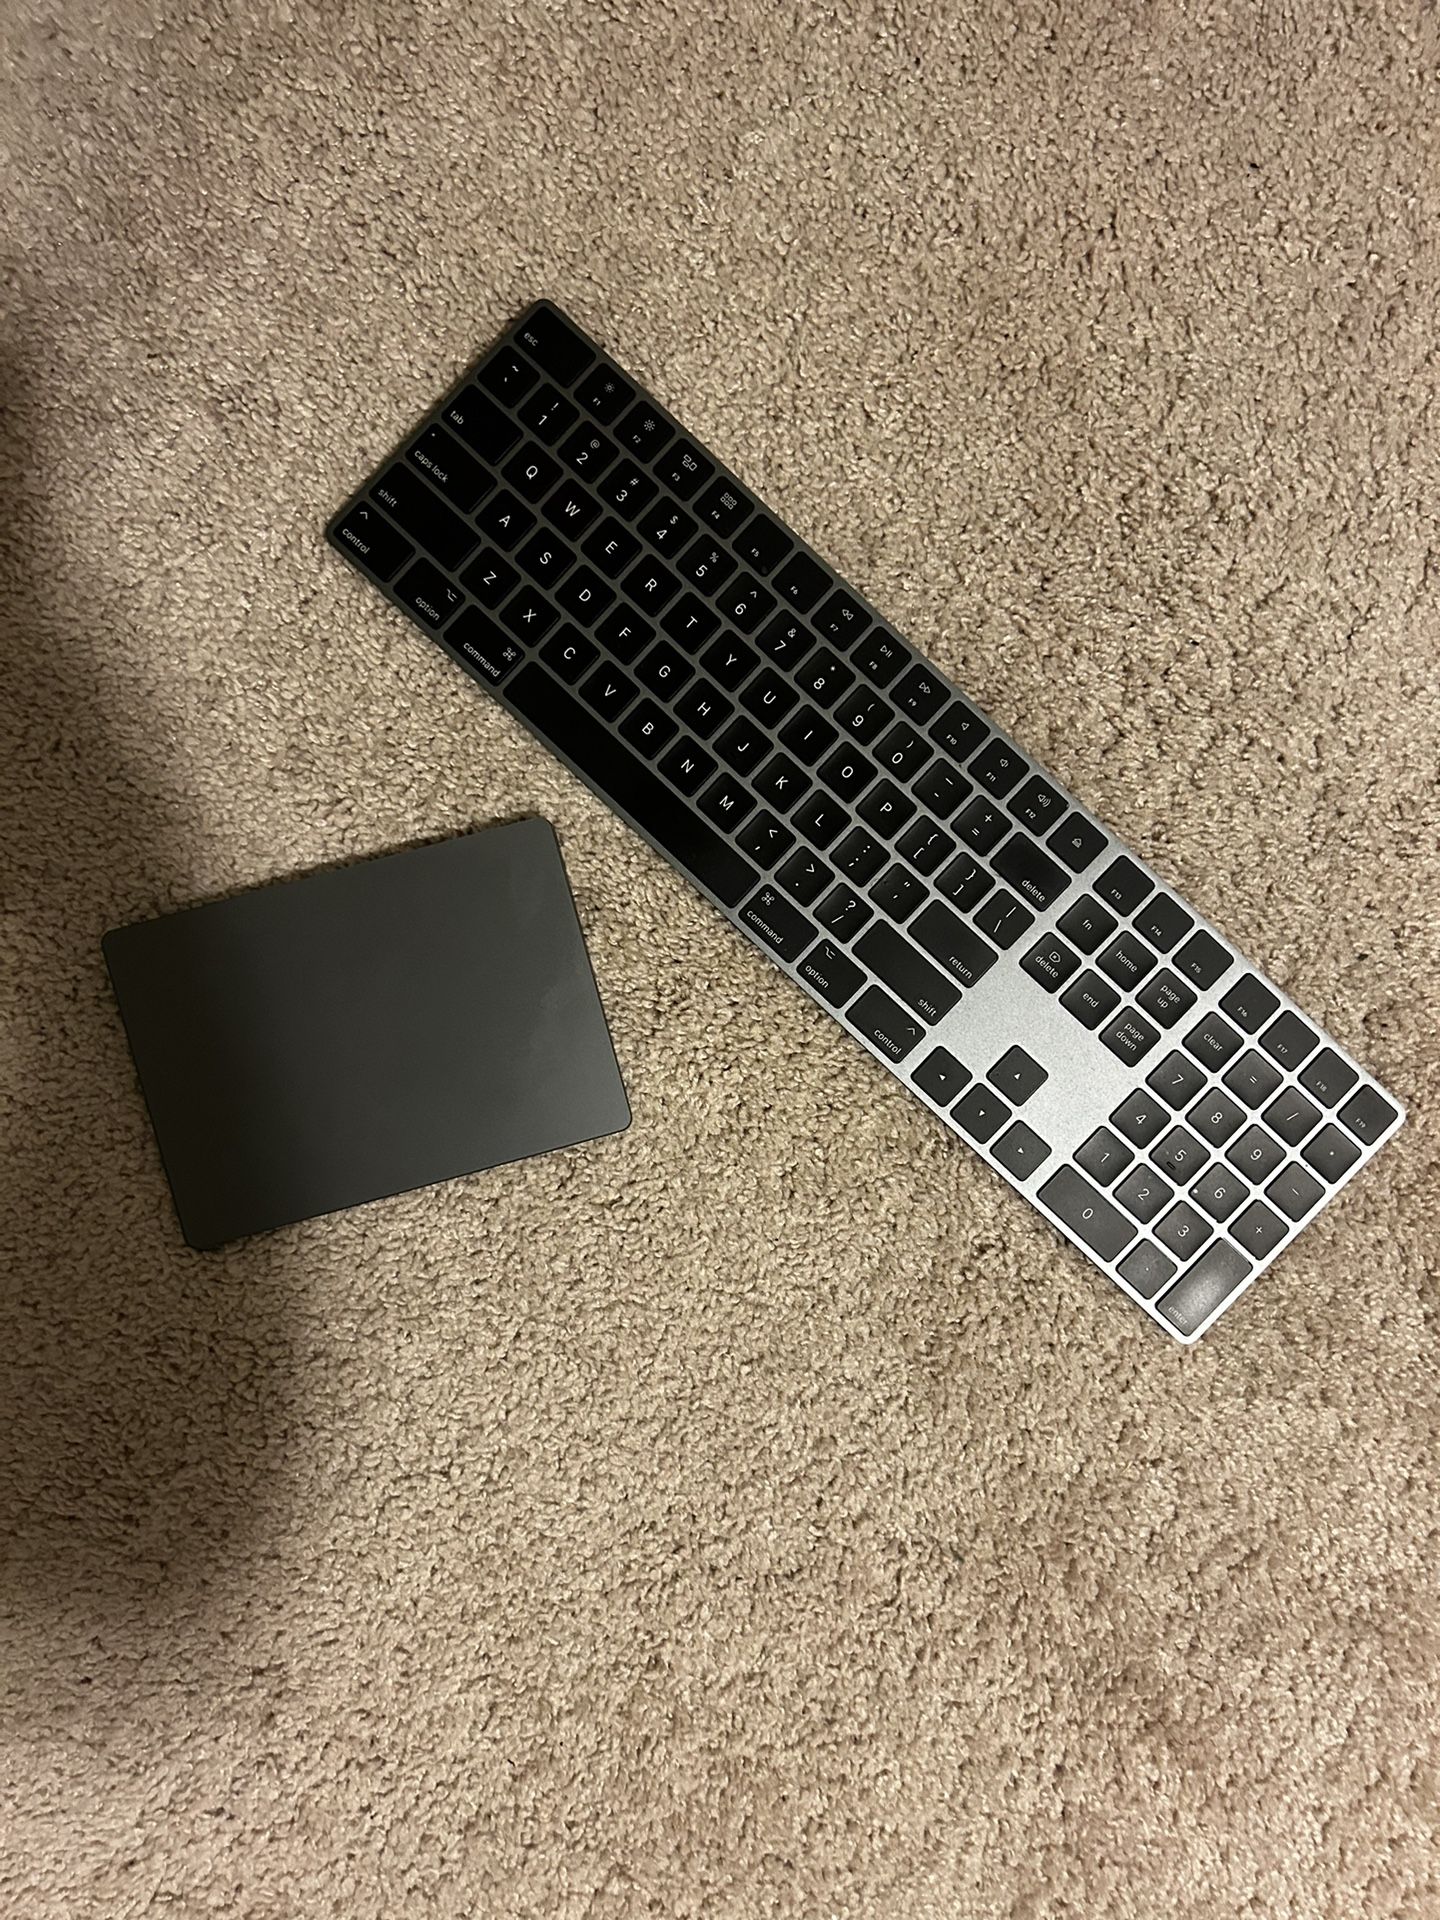 Mac Keyboard and Trackpad Black